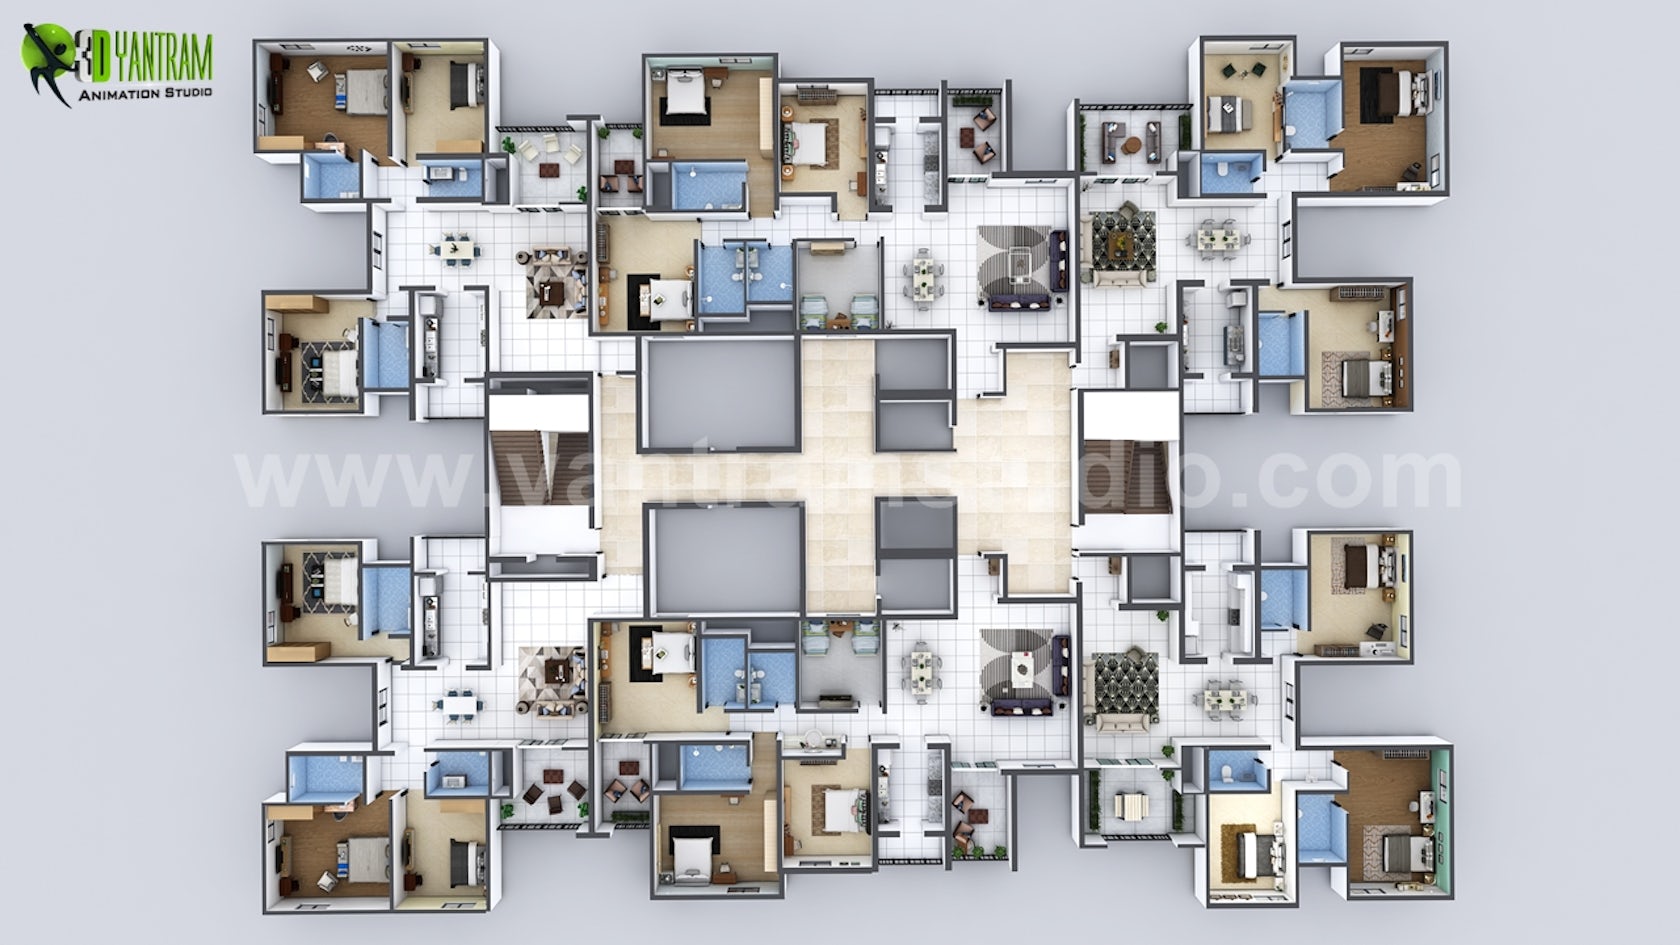 Creative 3D Floor Plan of Entire Apartment Floor Design by